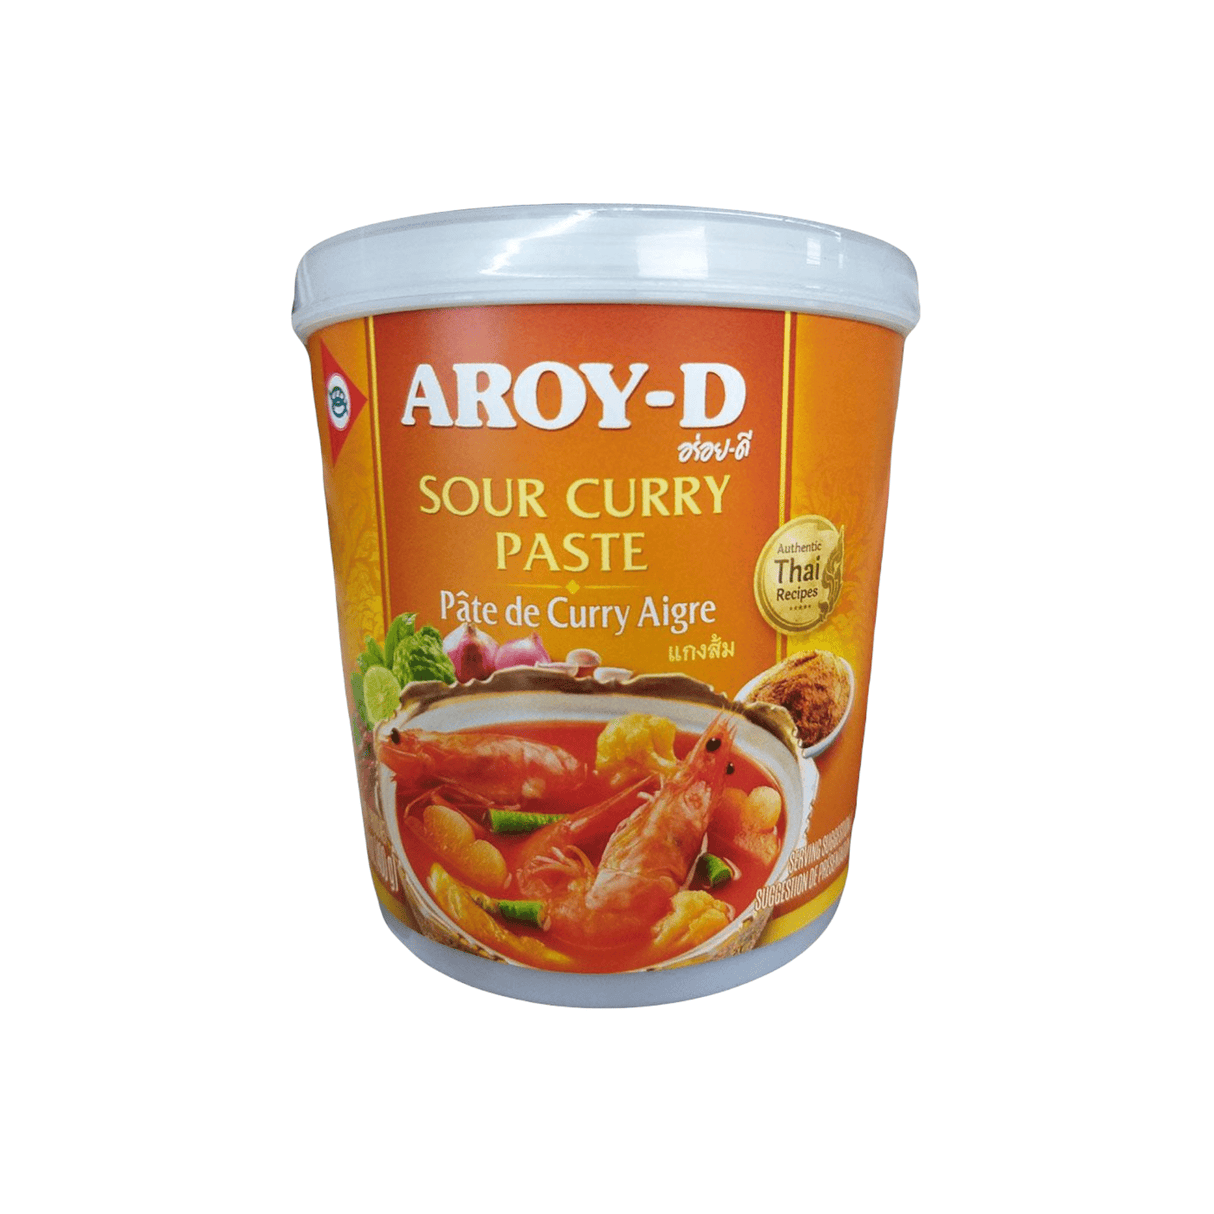 Aroy-d Sour Curry Paste